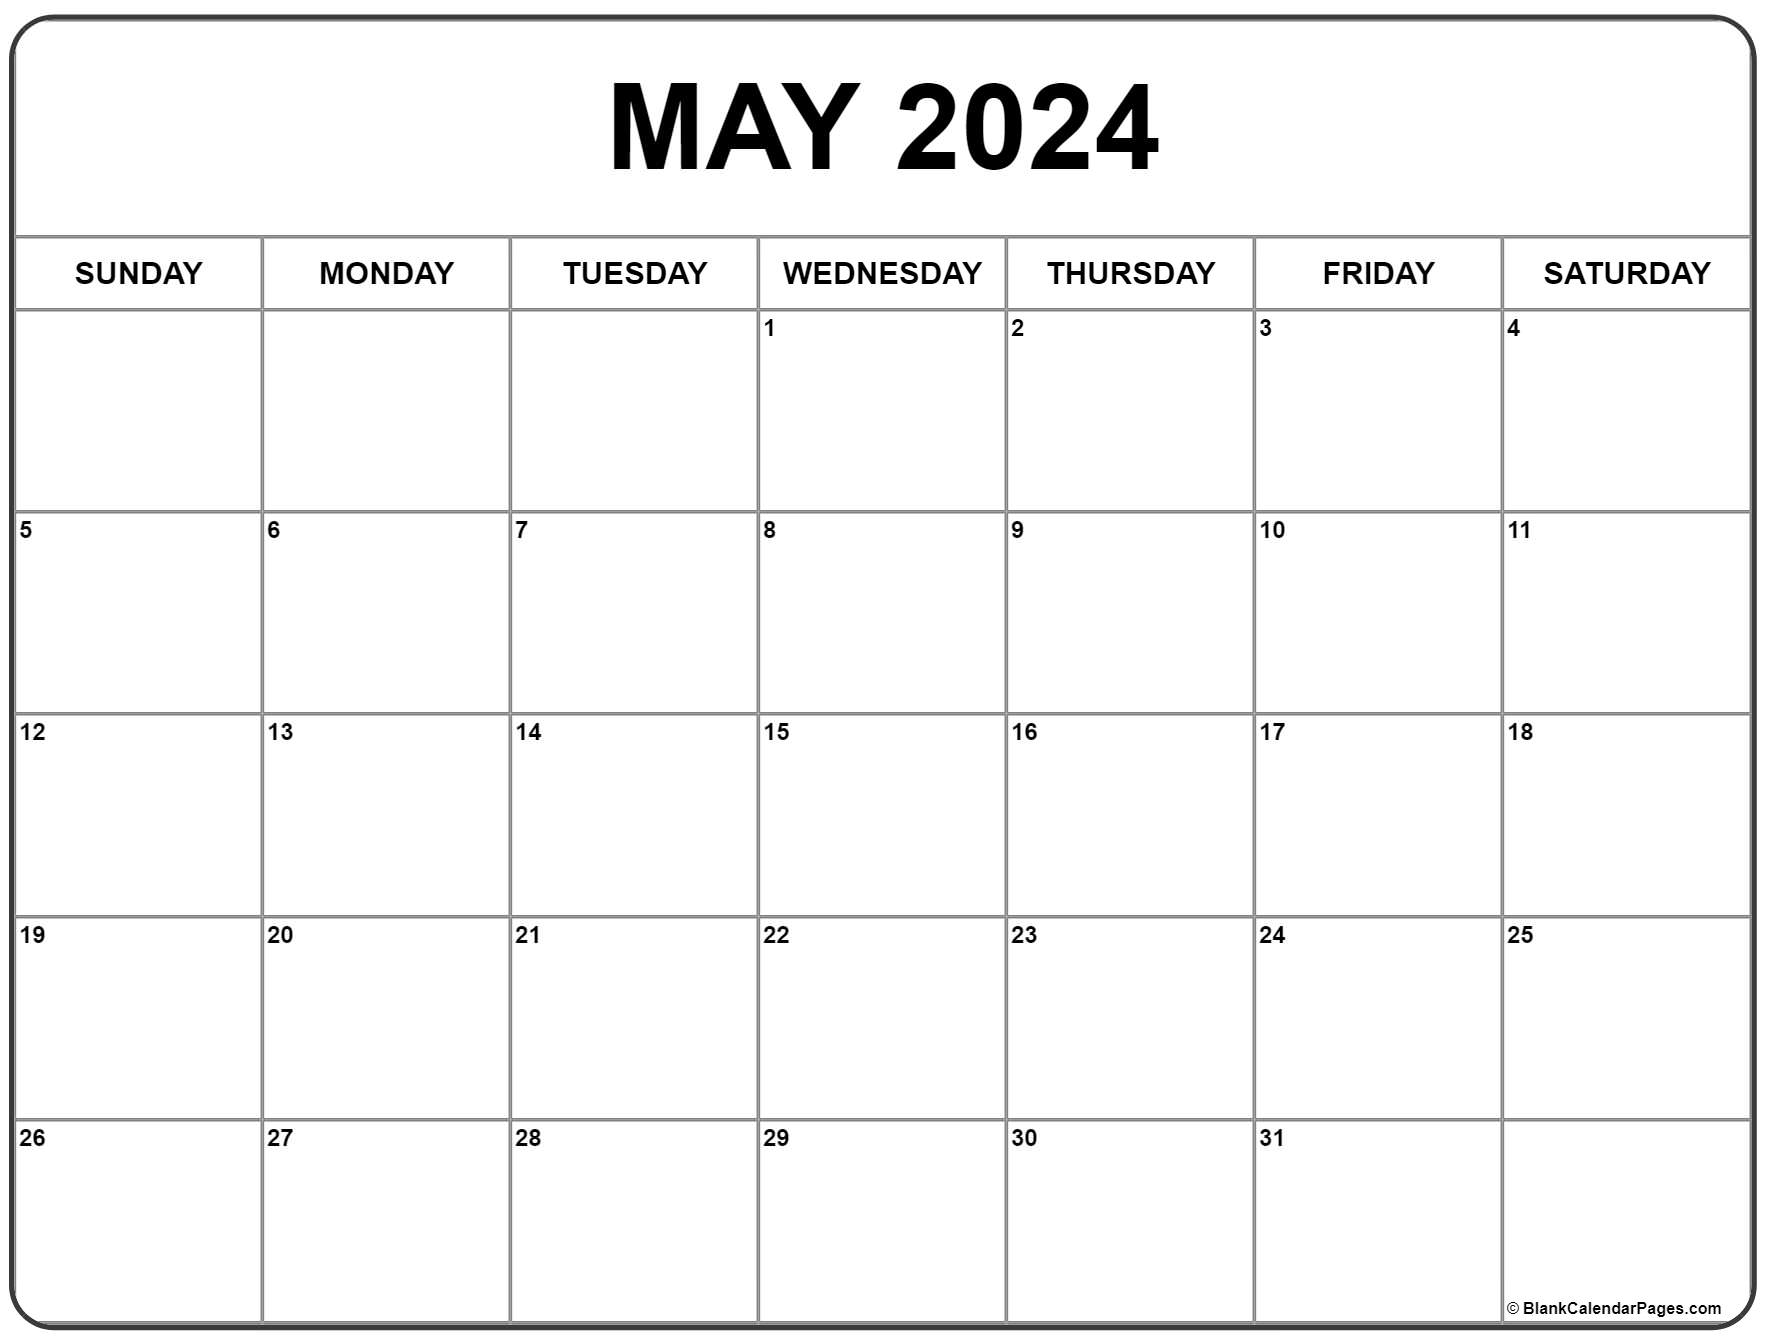 May 2024 Calendar | Free Printable Calendar for A-Printable-Calendar May 2024